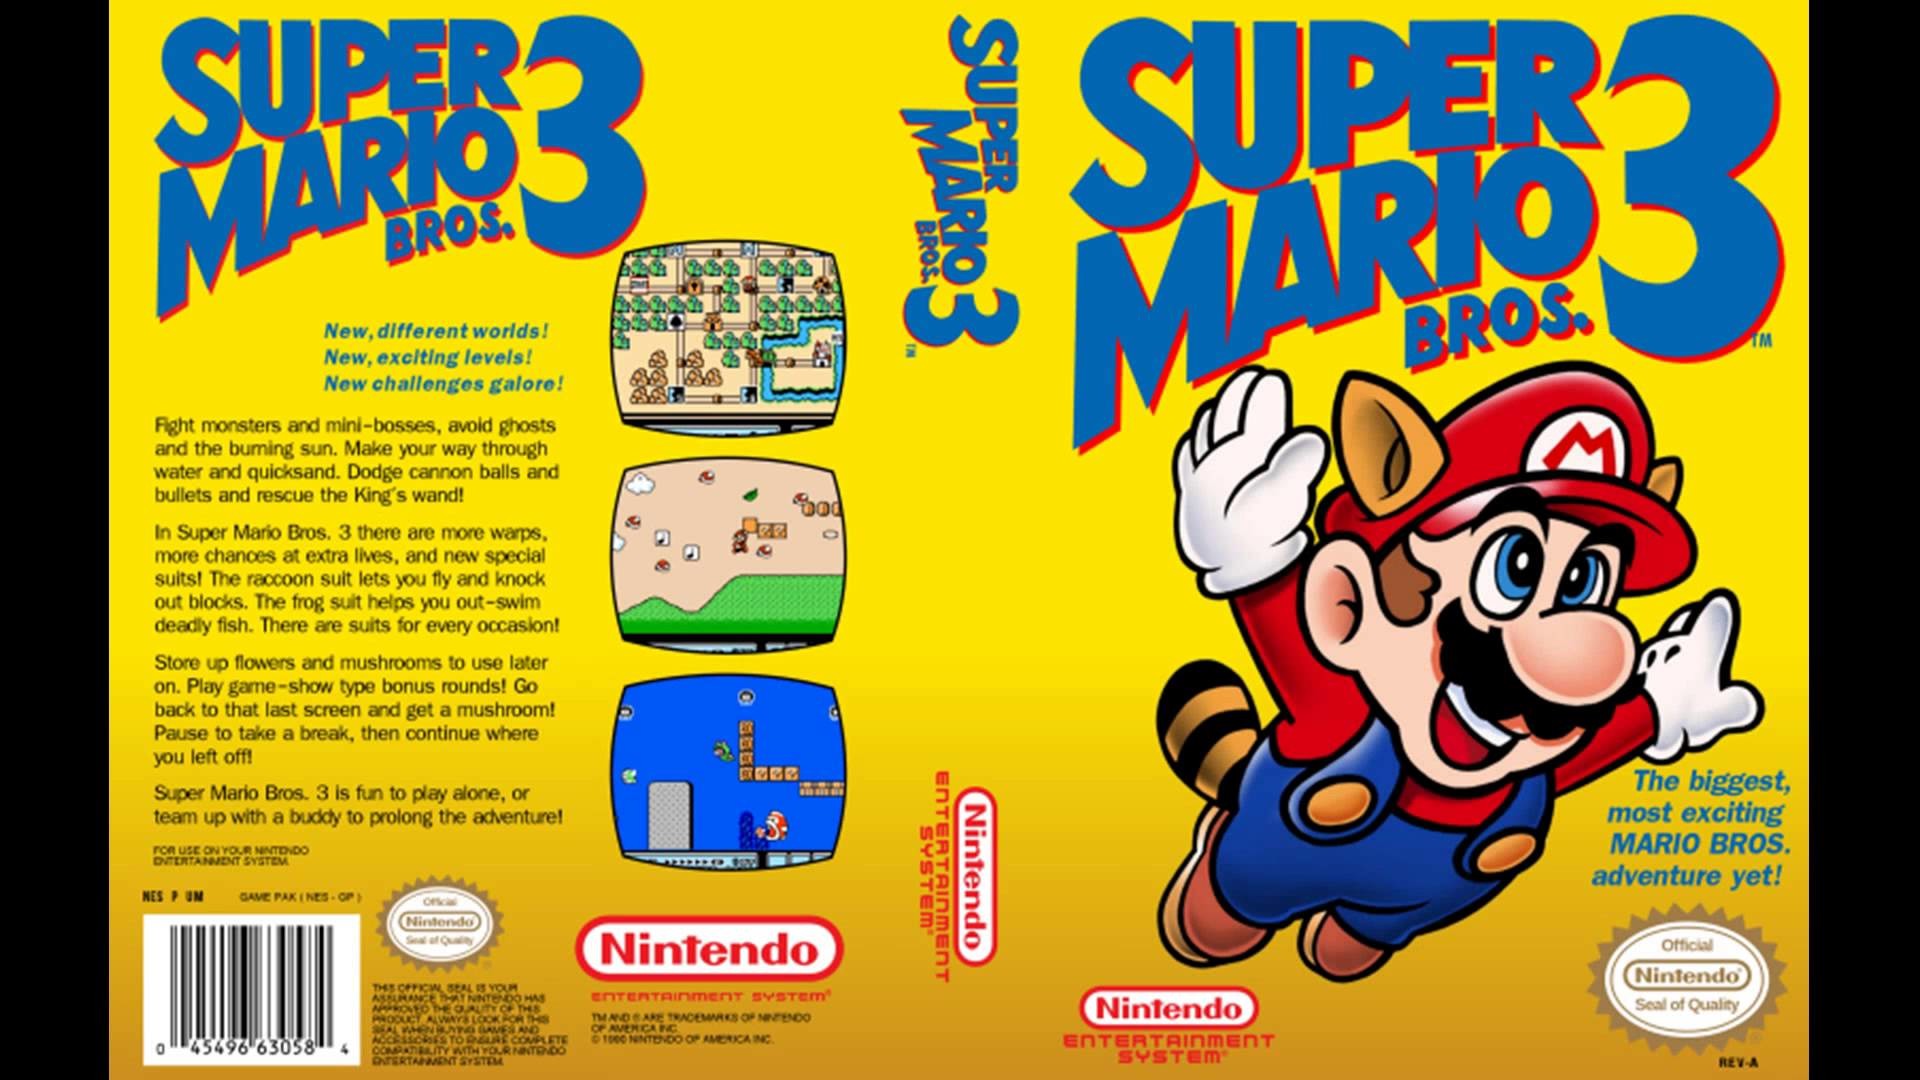 1920x1080 Super Mario Bros 3 Soundtrack - (World 1 - World 8)